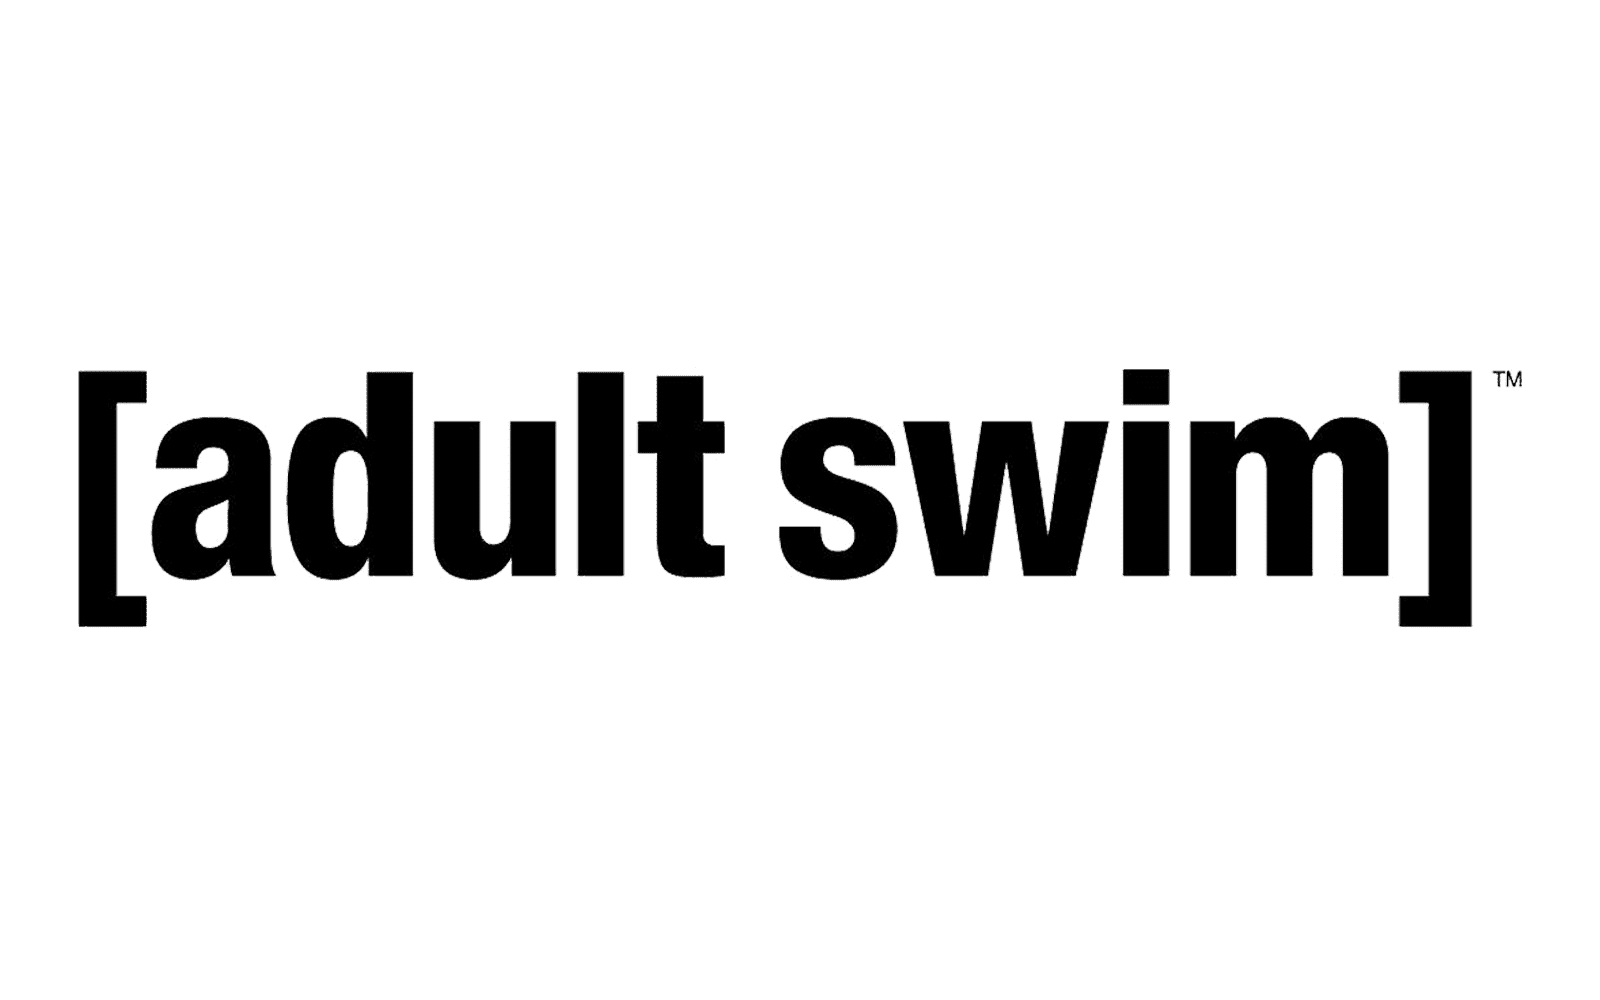 Adult_Swim_logo_PNG3.png